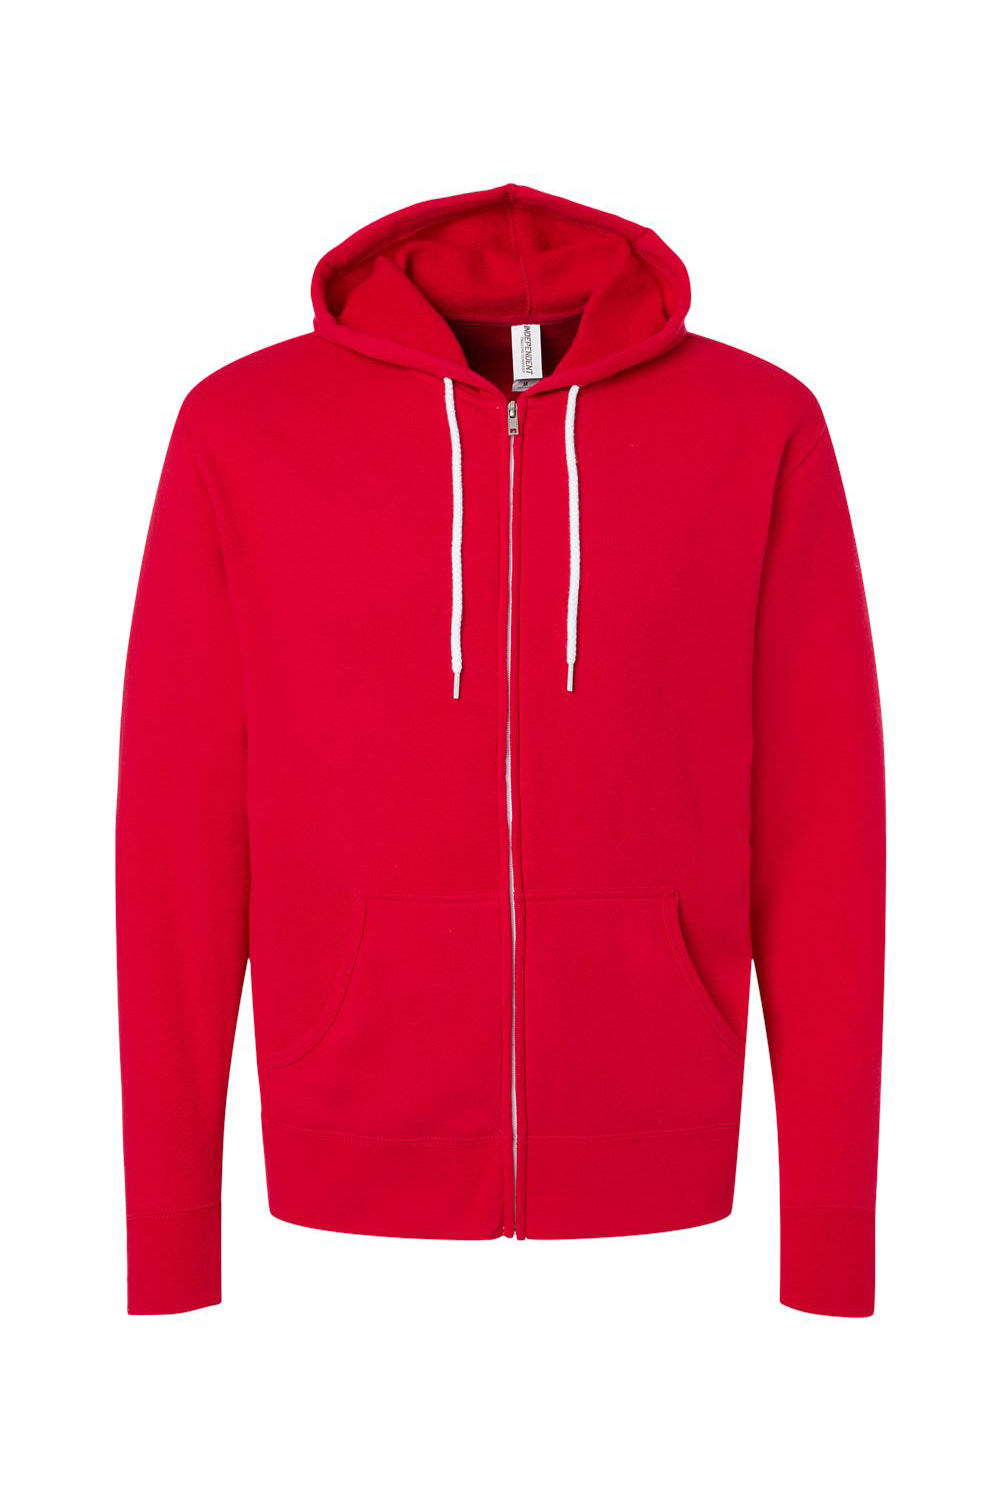 Independent Trading Co. AFX90UNZ Mens Full Zip Hooded Sweatshirt Hoodie Red Flat Front